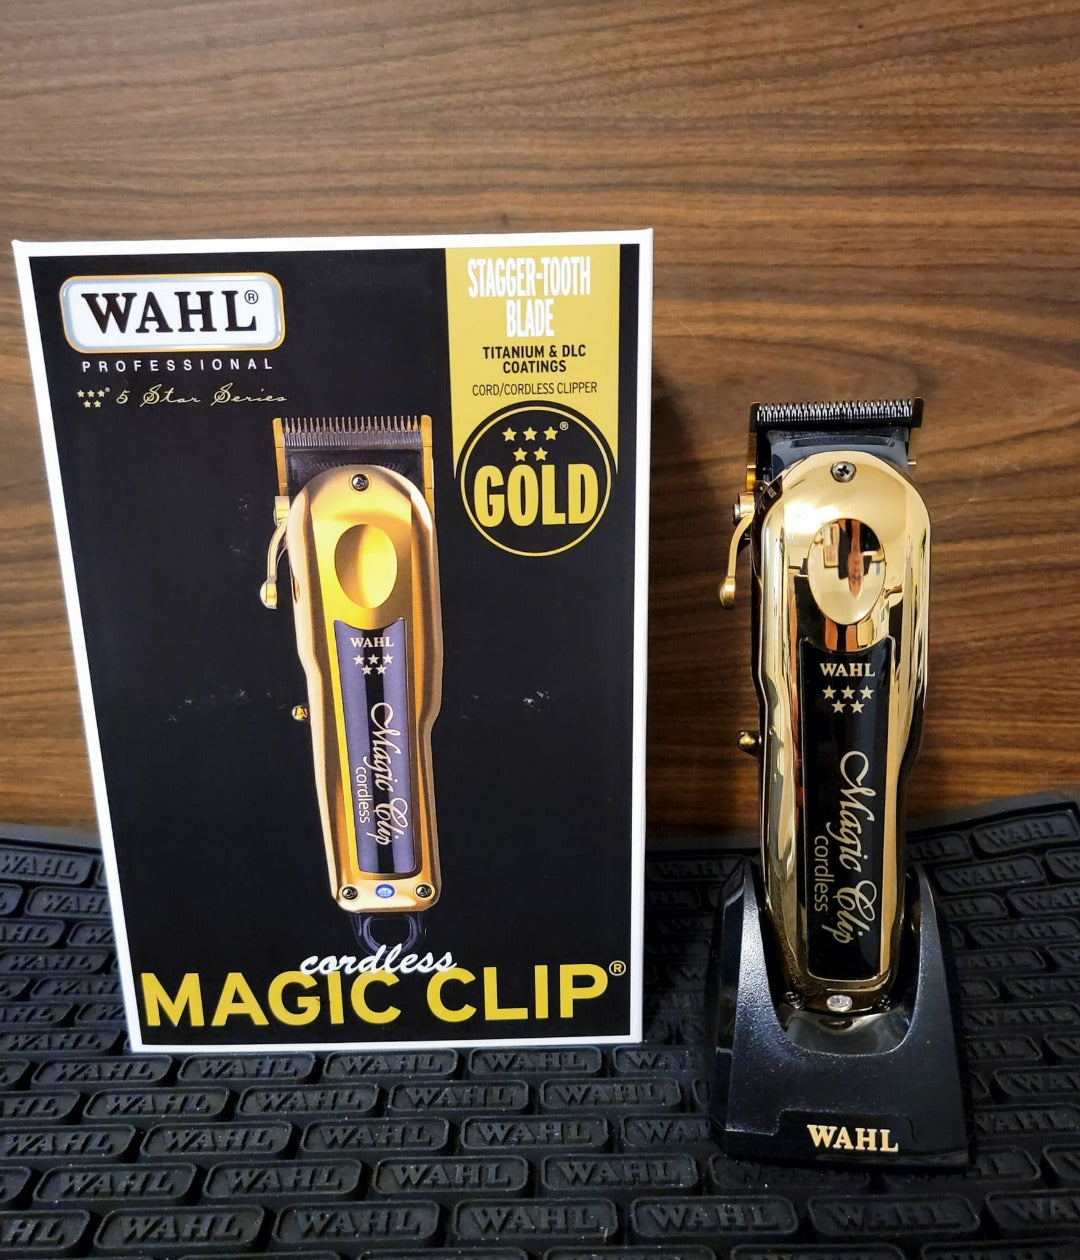 Wahl Professional 5 Star Gold Cordless Magic Clip Clipper